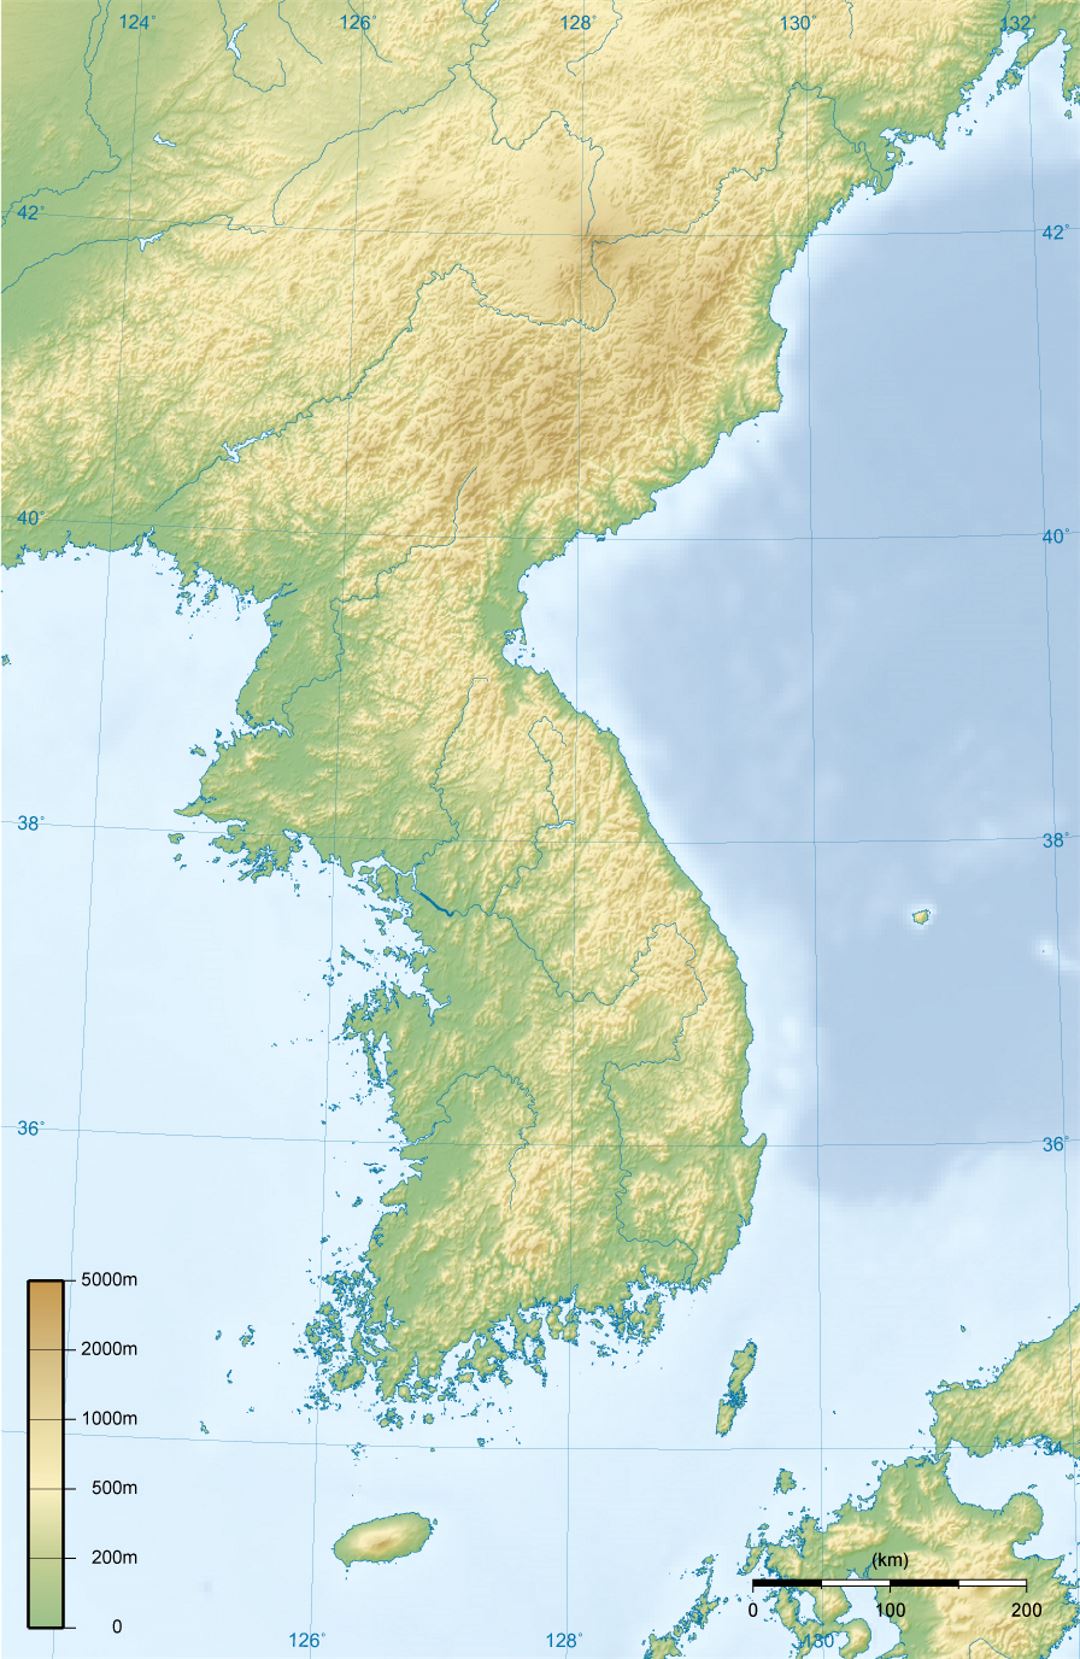 Detallado mapa topográfico de la Península de Corea